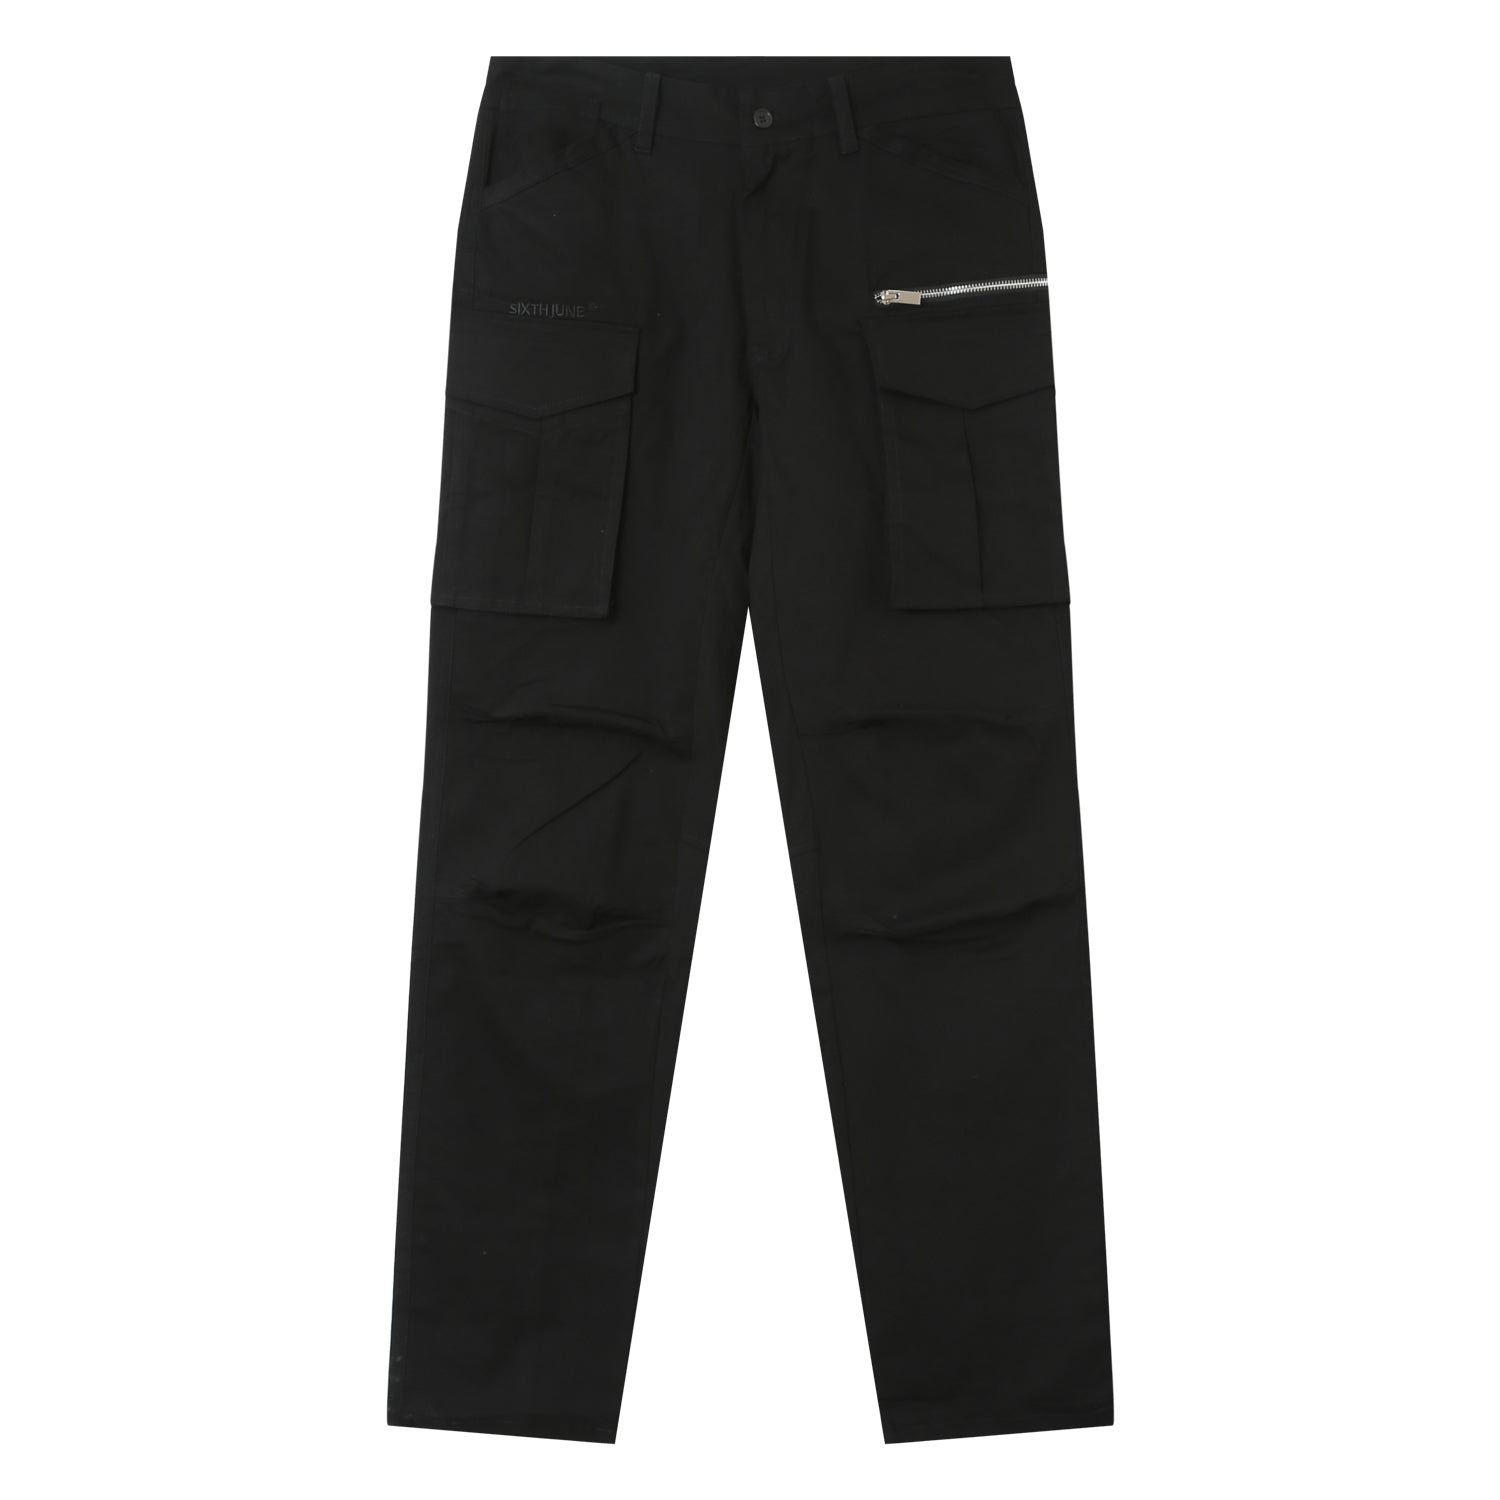 Straight cargo pants 23601-BLAC